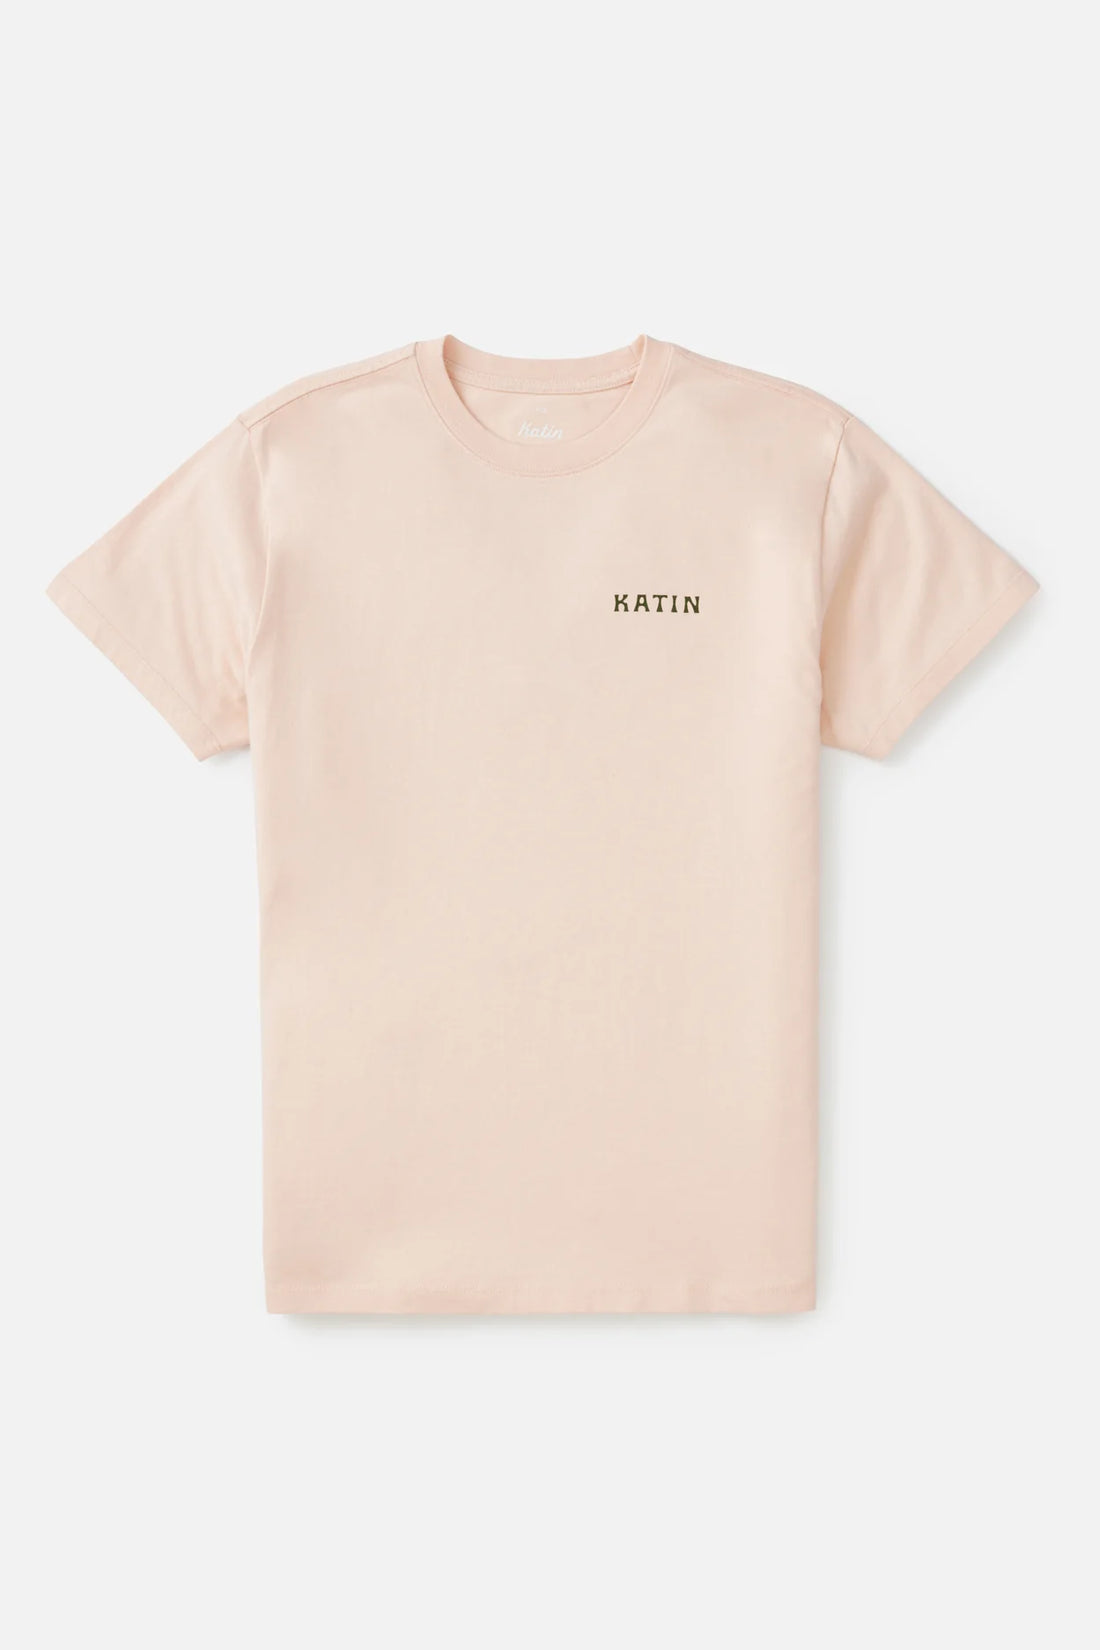 T-Shirt Vista Rose Katin